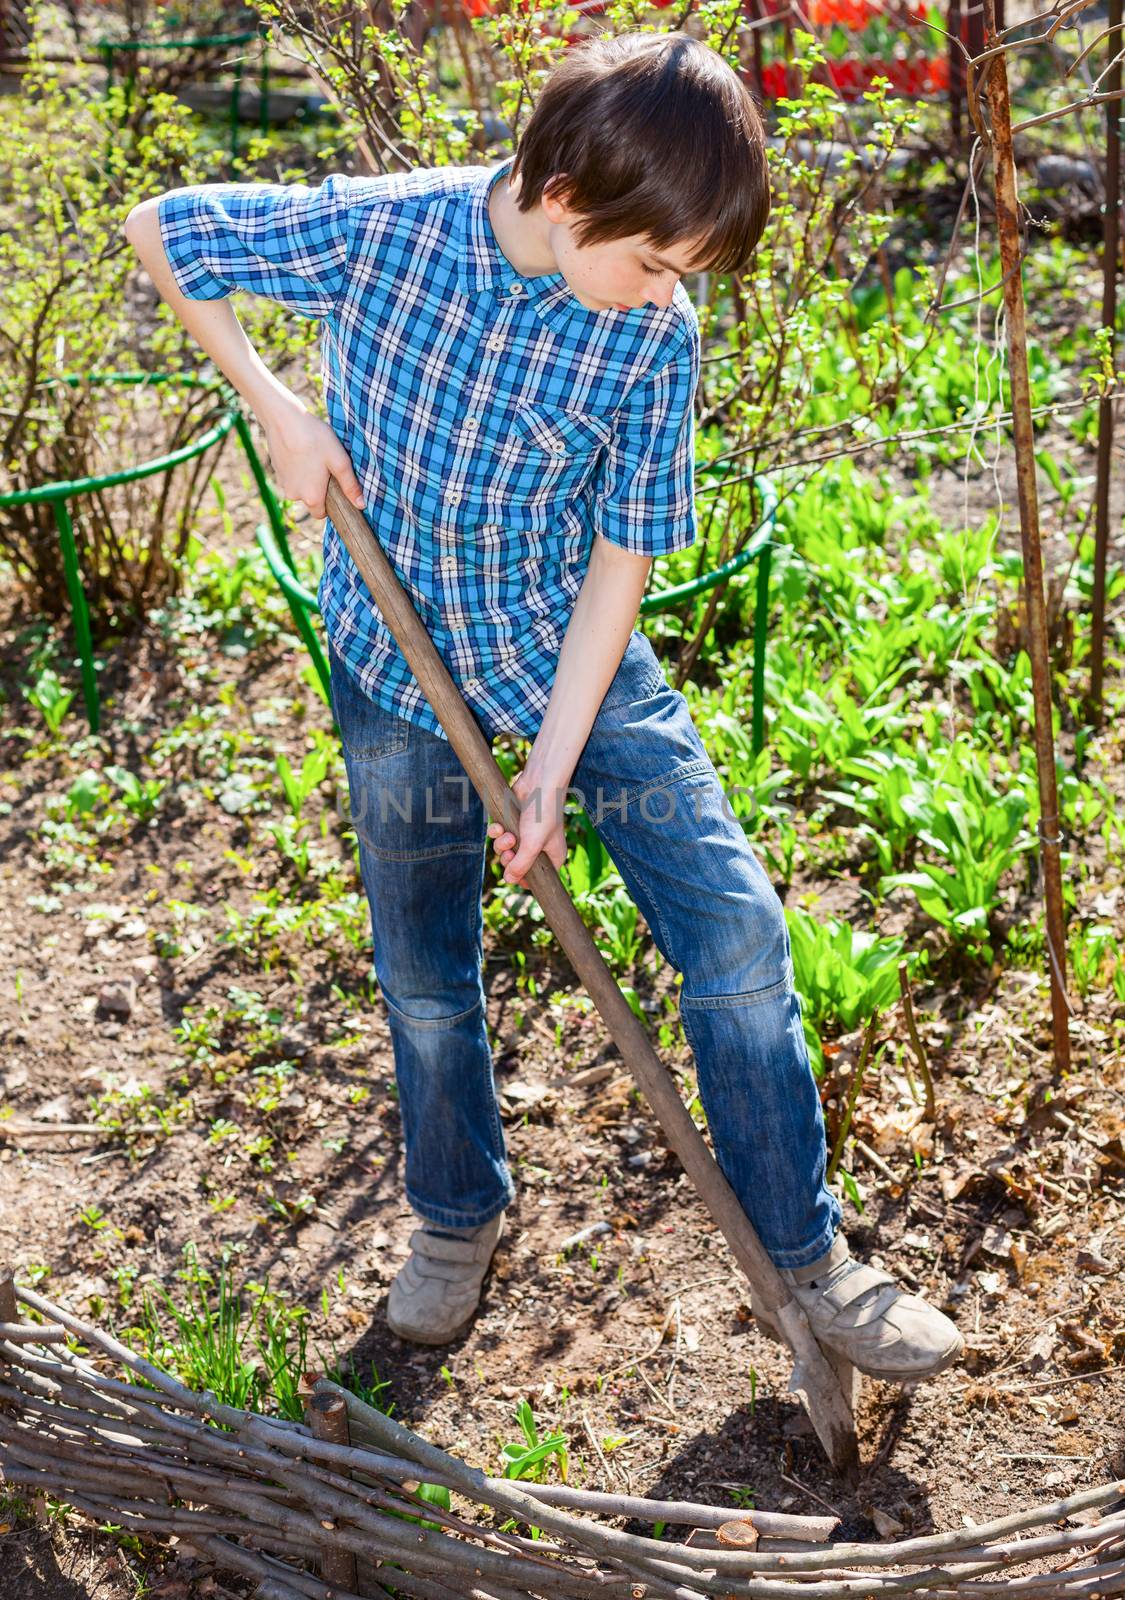 Young boy gardening by naumoid